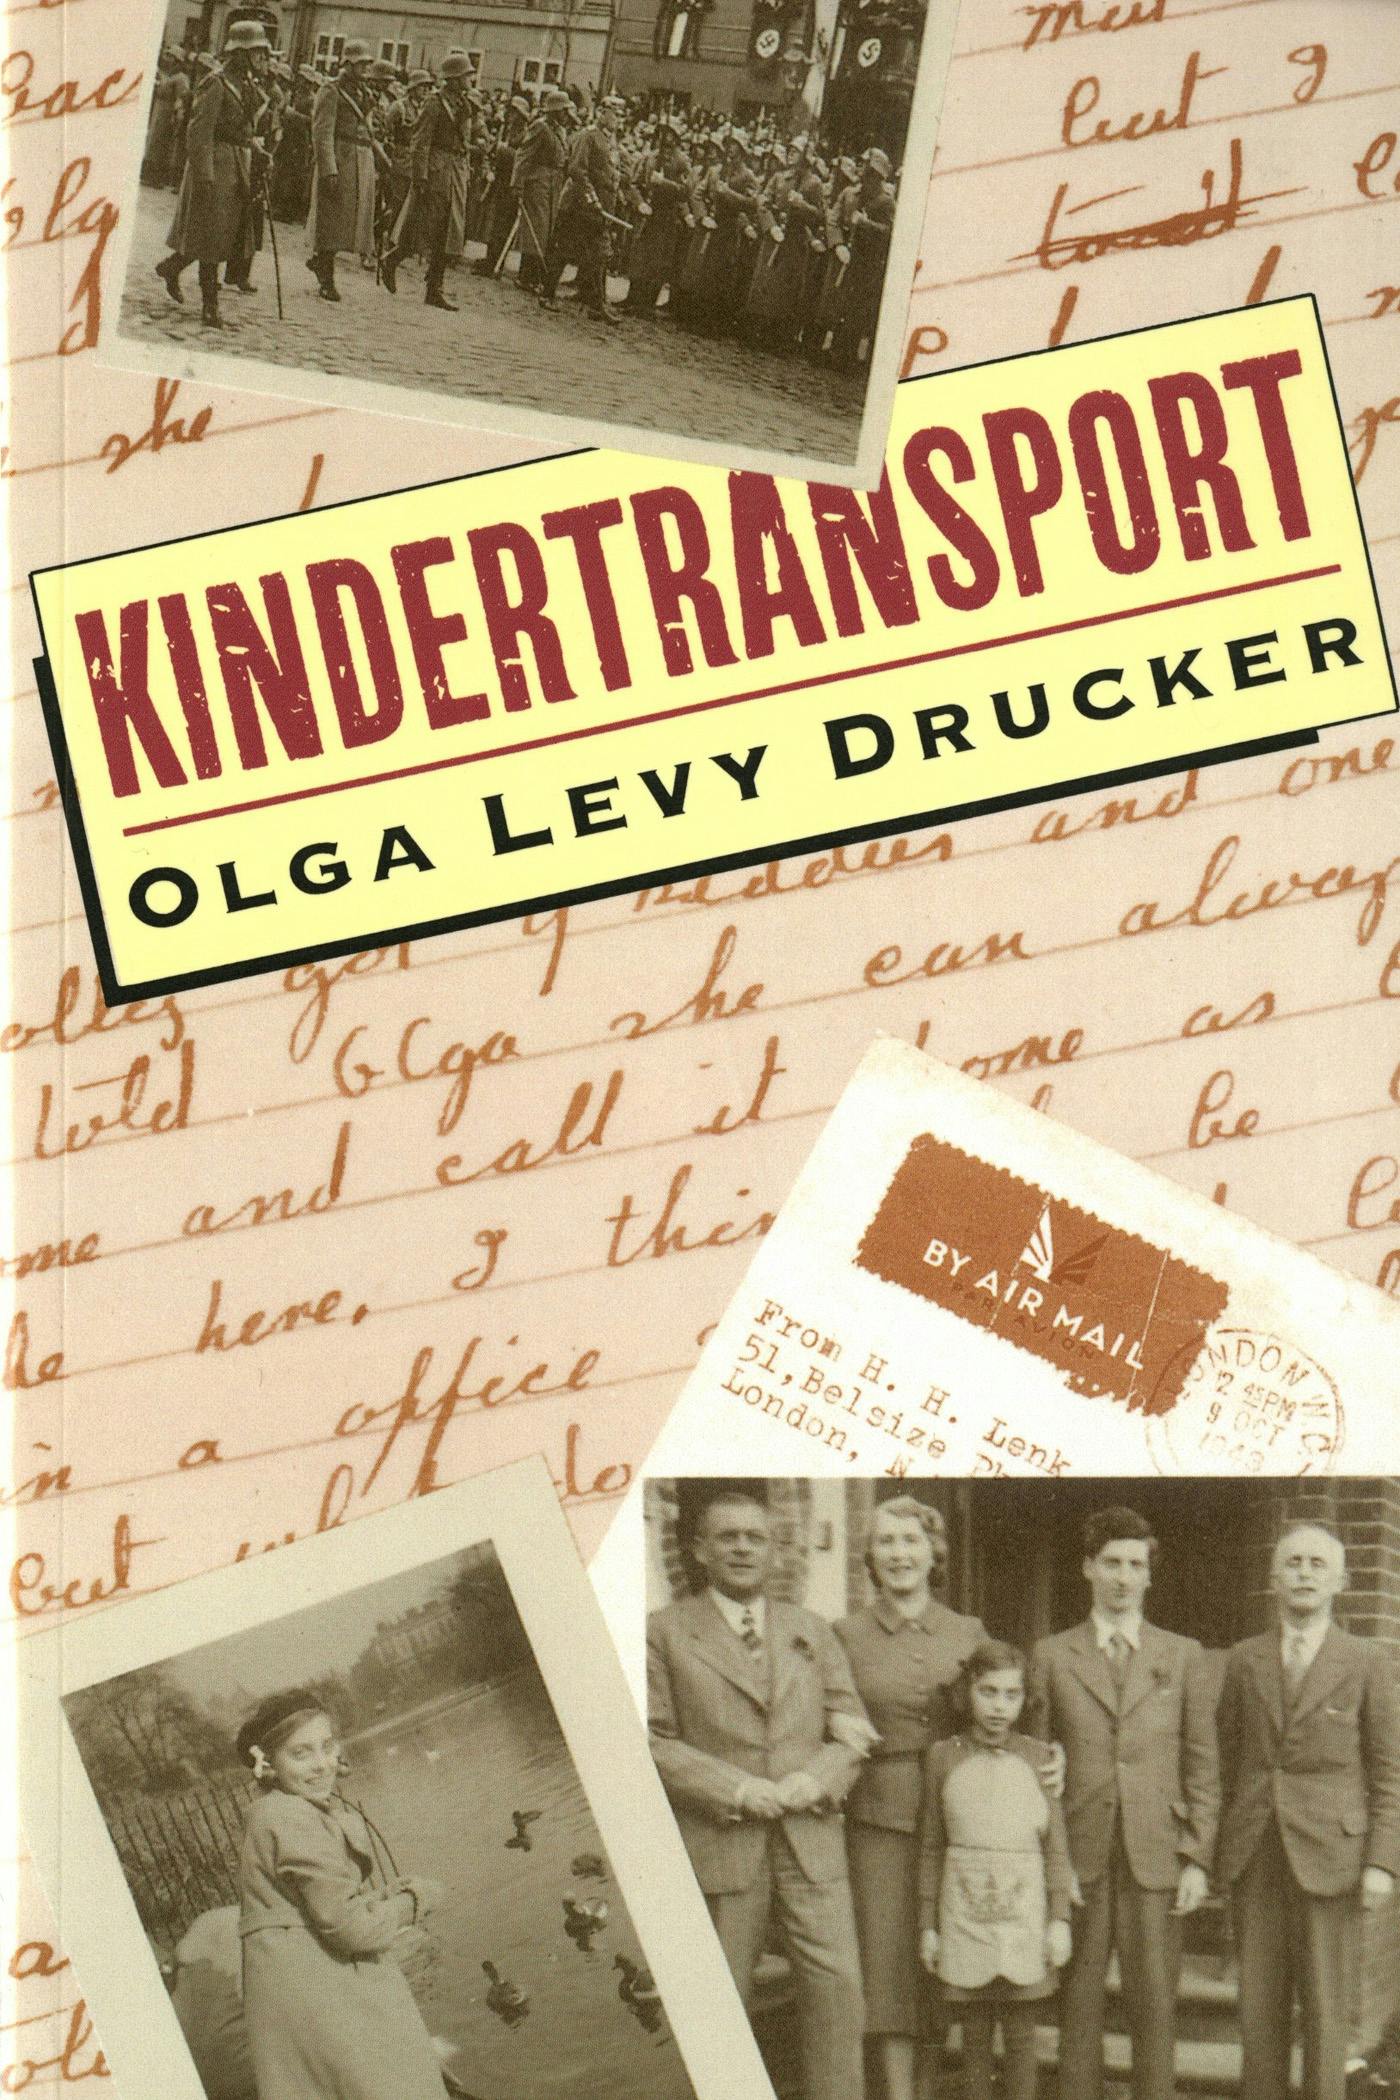 Kindertransport by Olga Levy Drucker